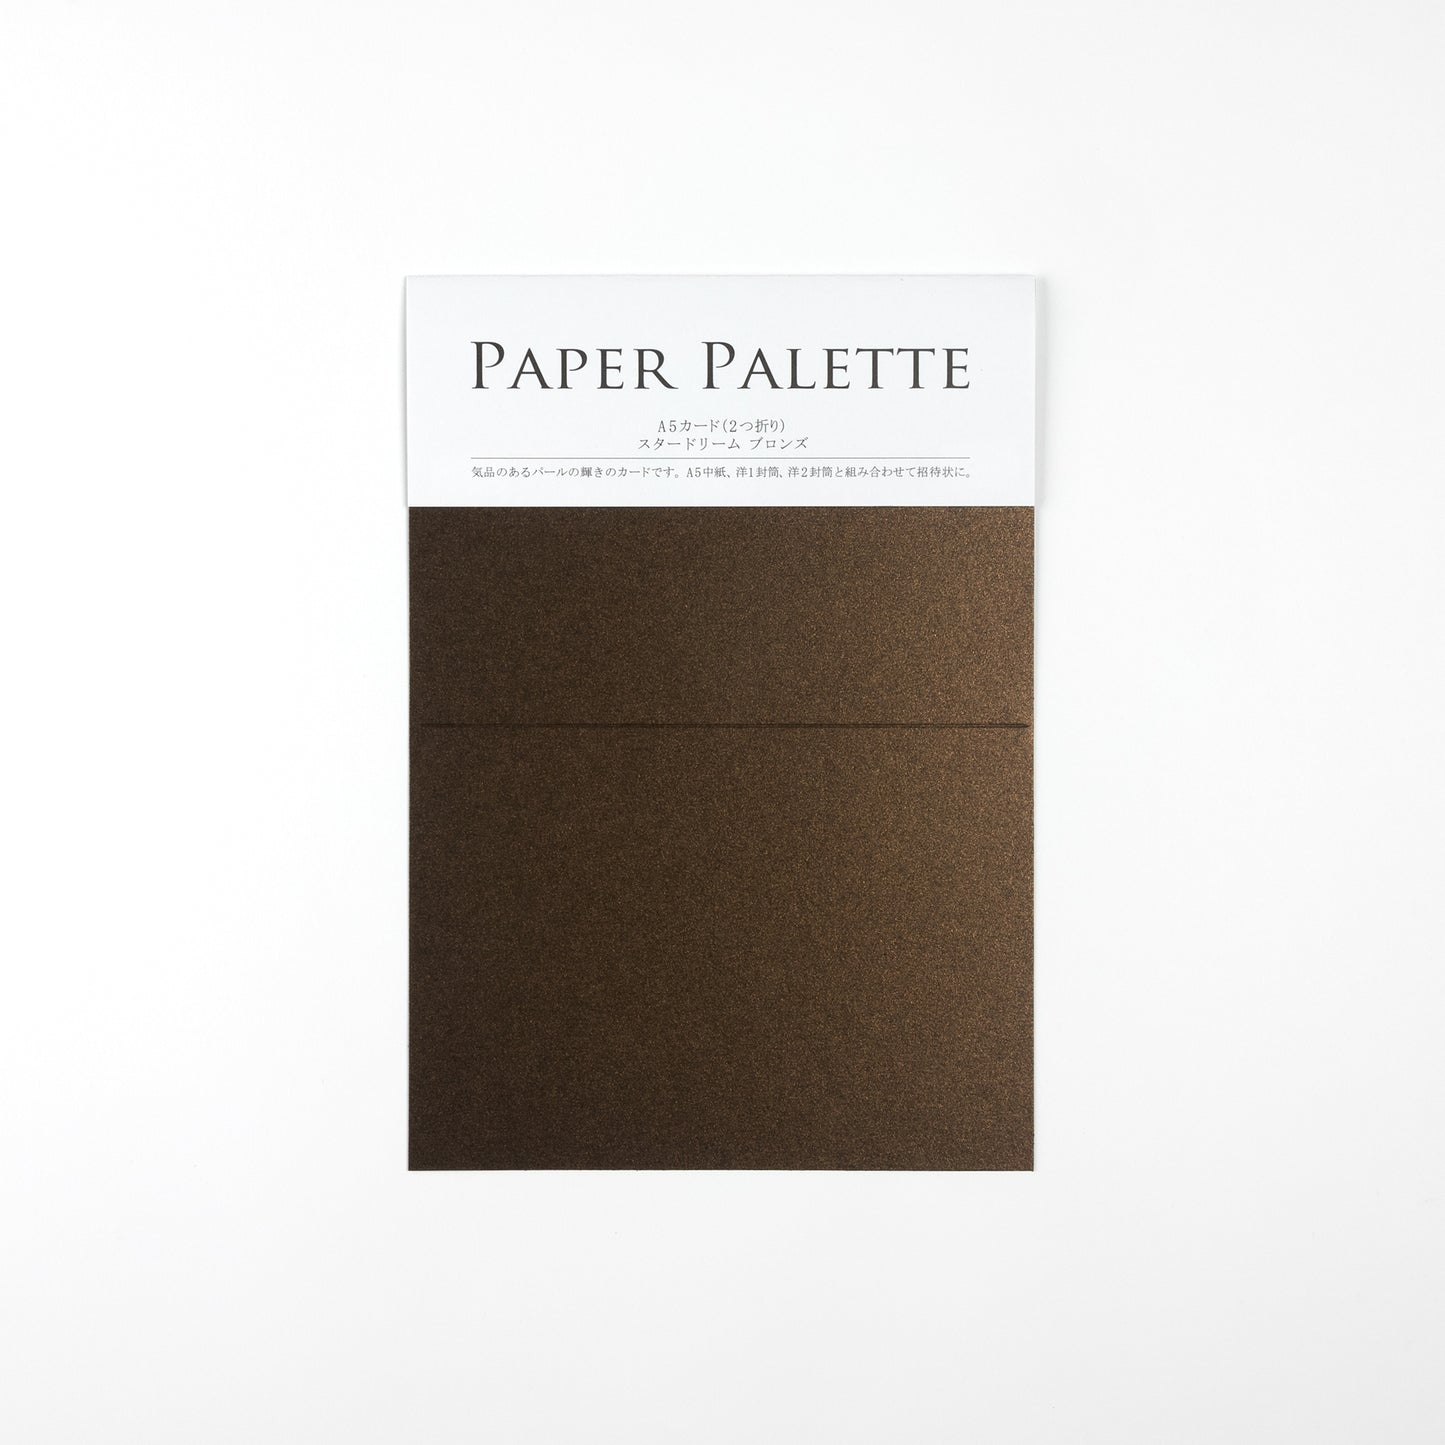 PAPER PALETTE A5 スタードリーム ブロンズ